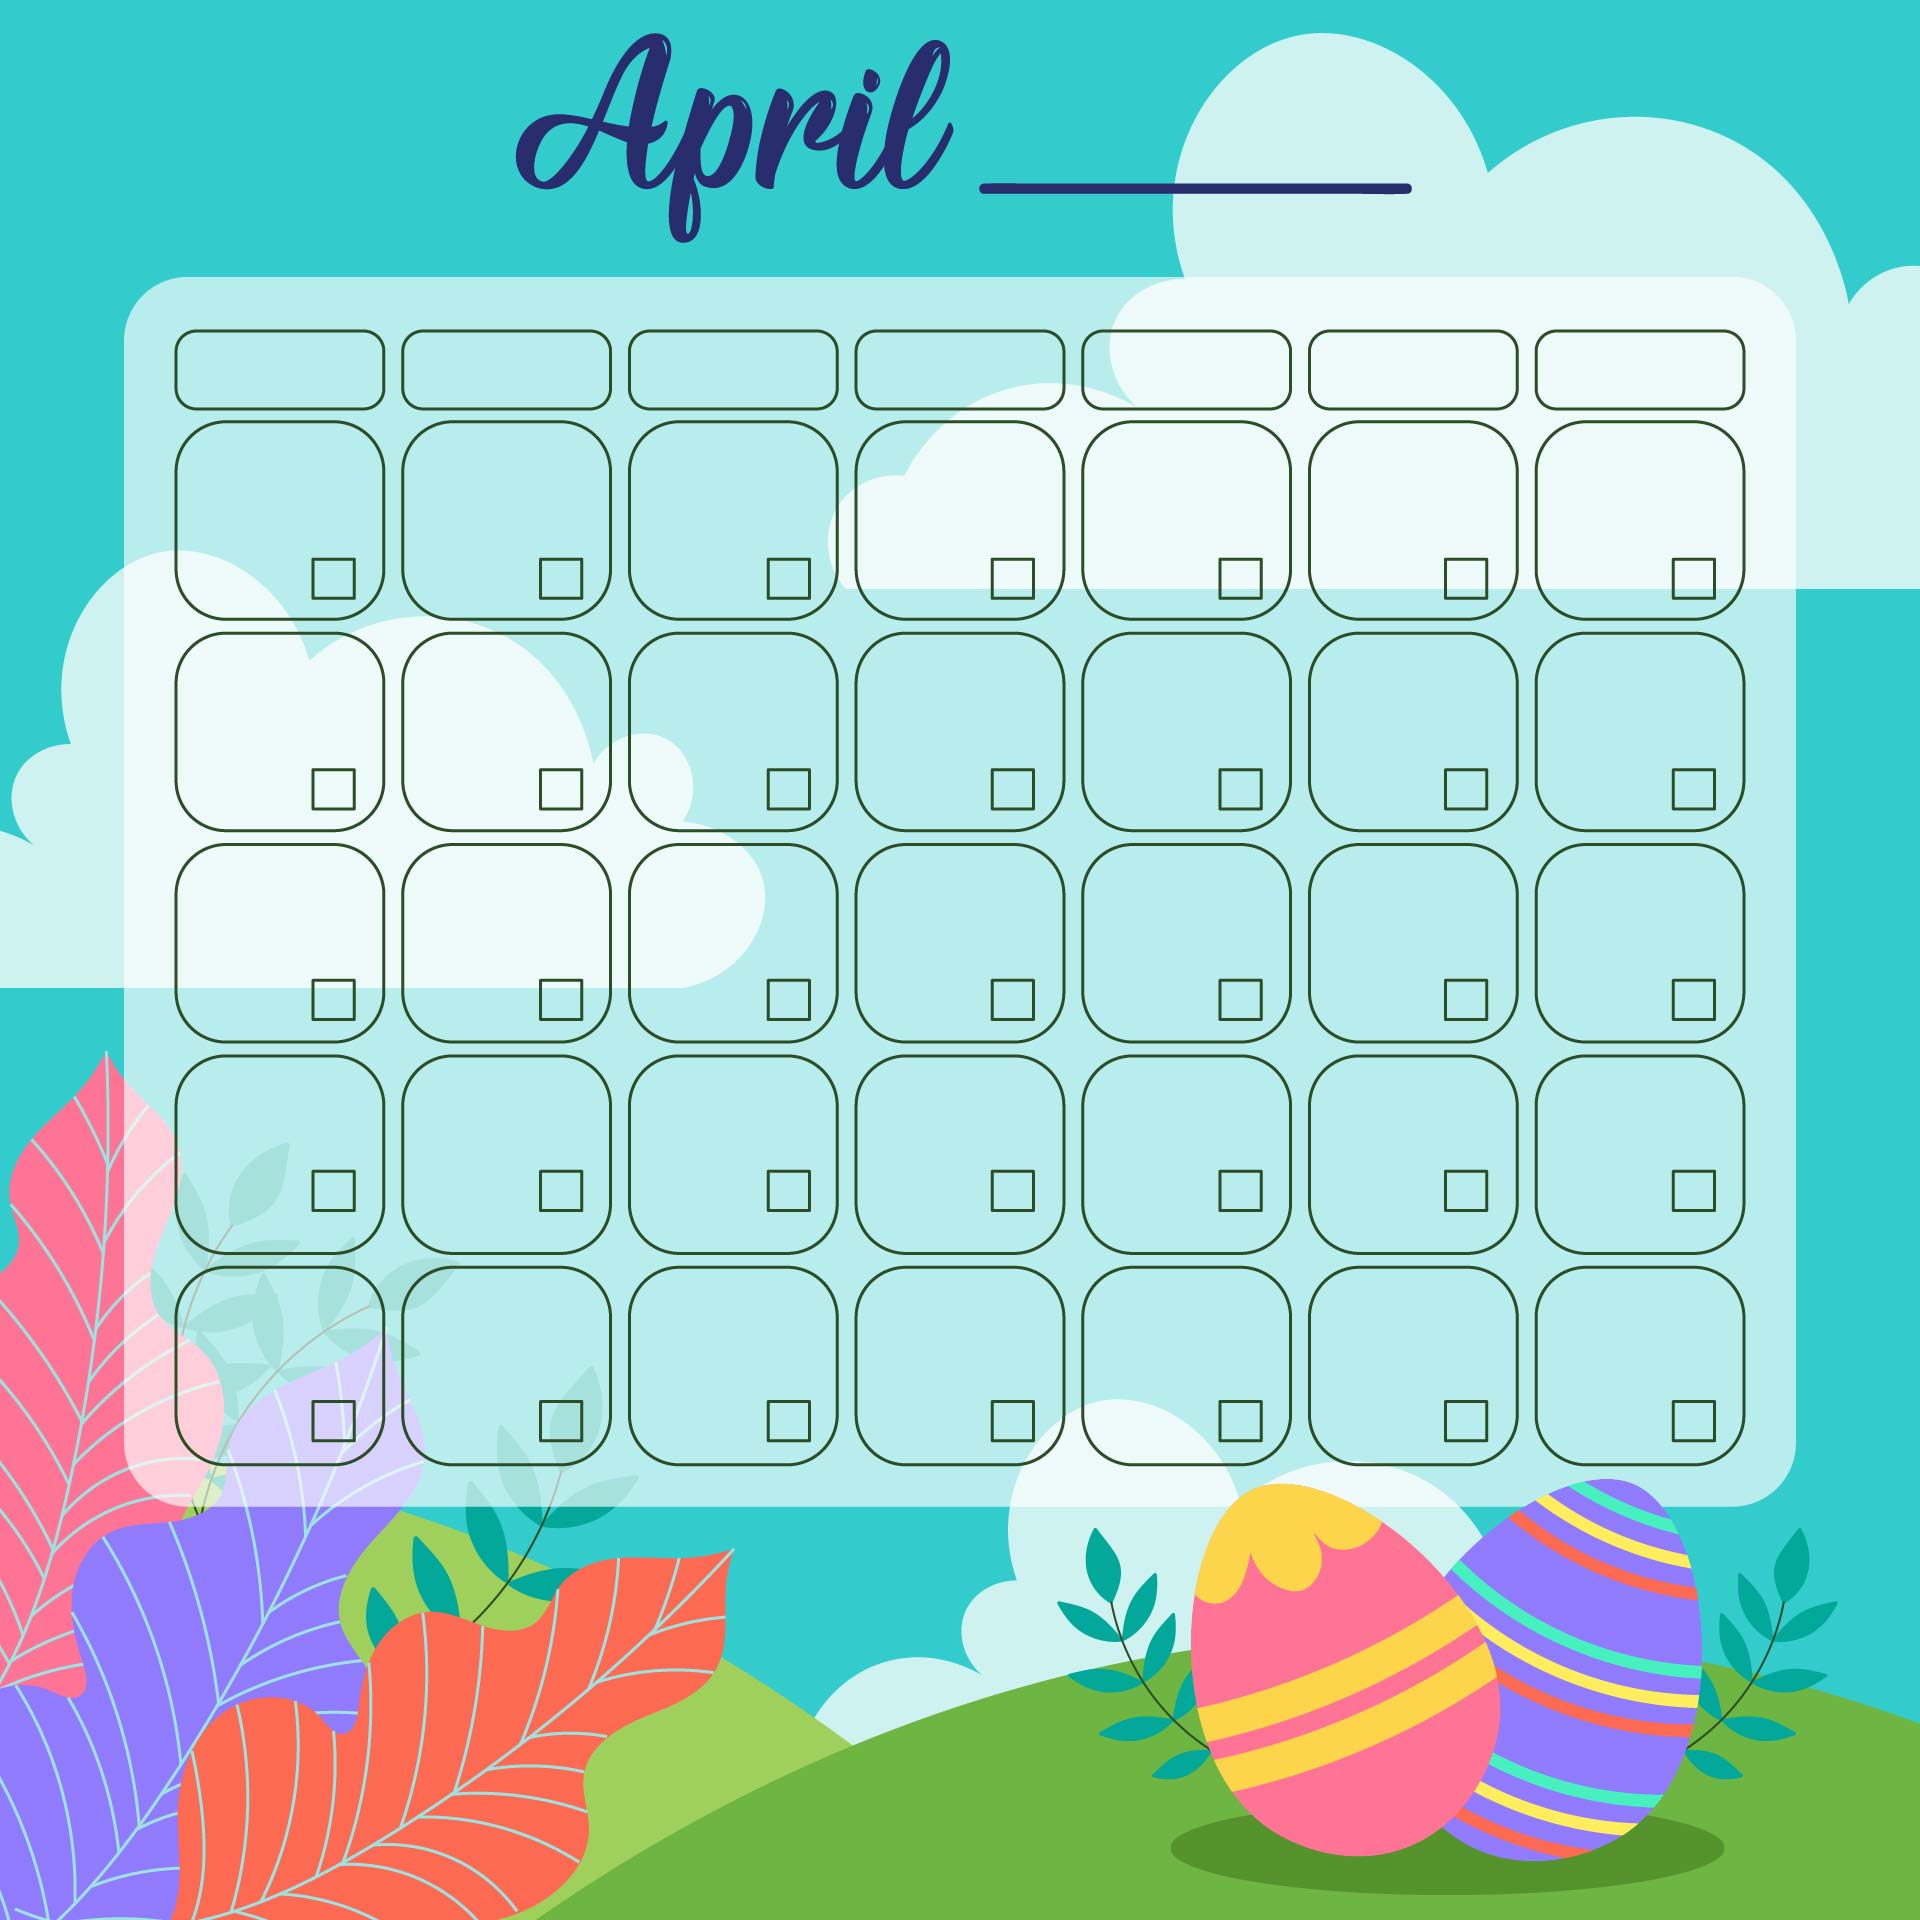 Easter April 2015 Calendar Printable